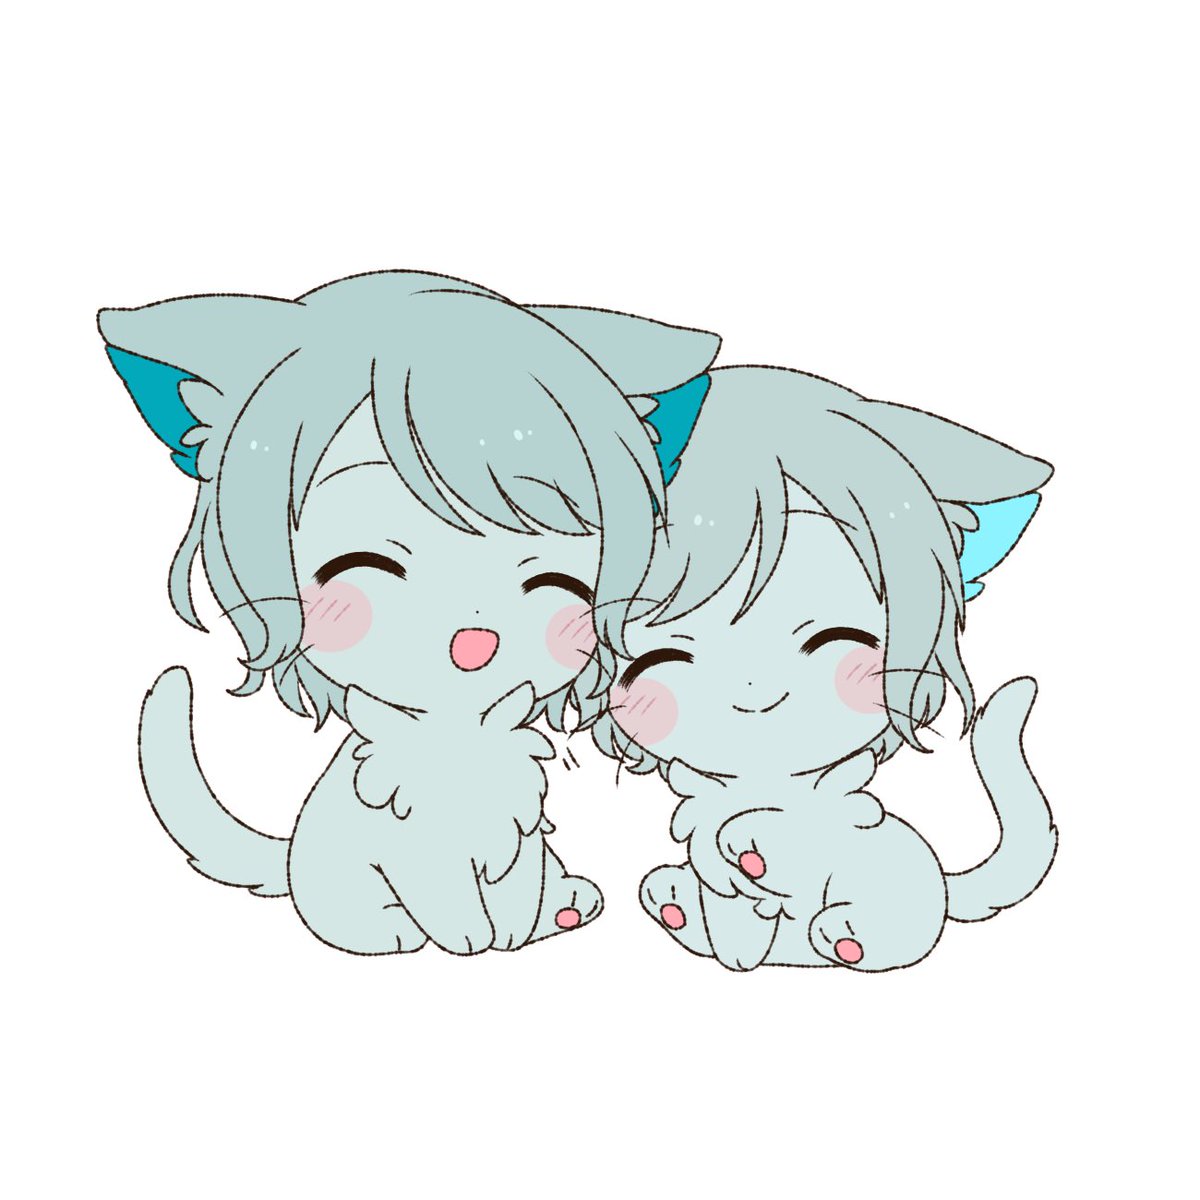 hikawa hina ,hikawa sayo animalization closed eyes cat siblings twins 2girls smile  illustration images